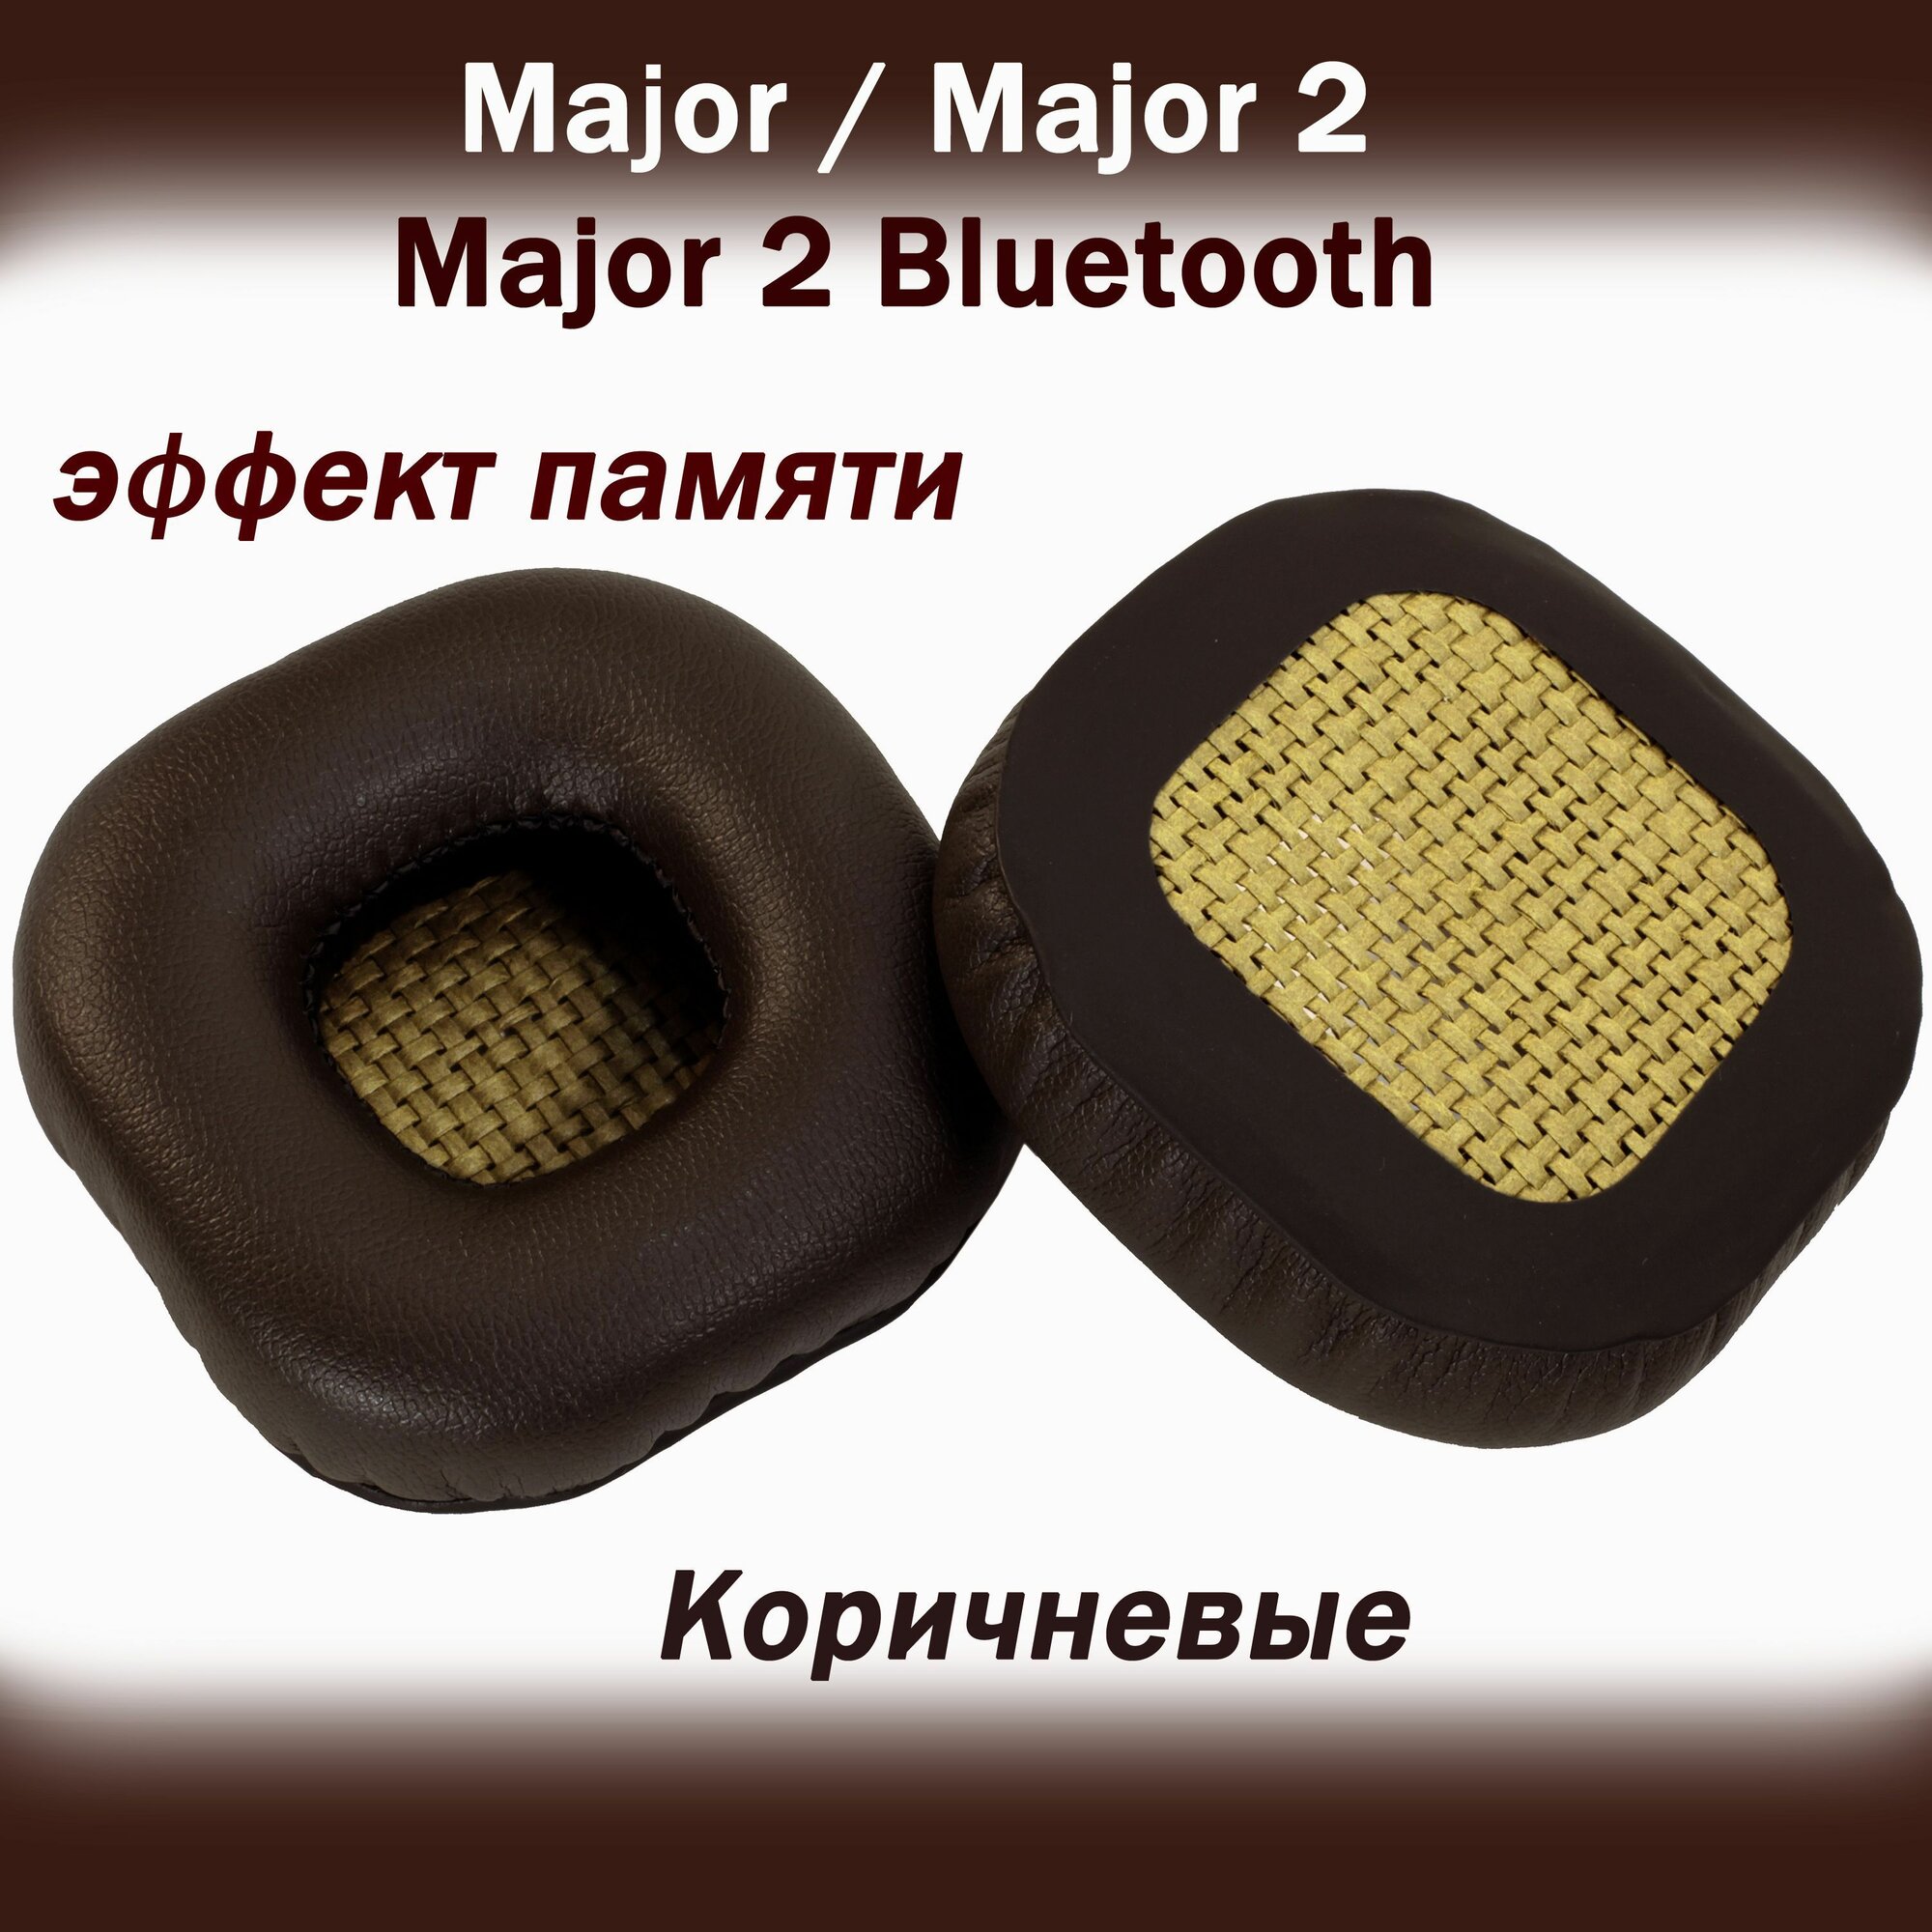 Амбушюры Major 2 Bluetooth, Major 2 коричневые